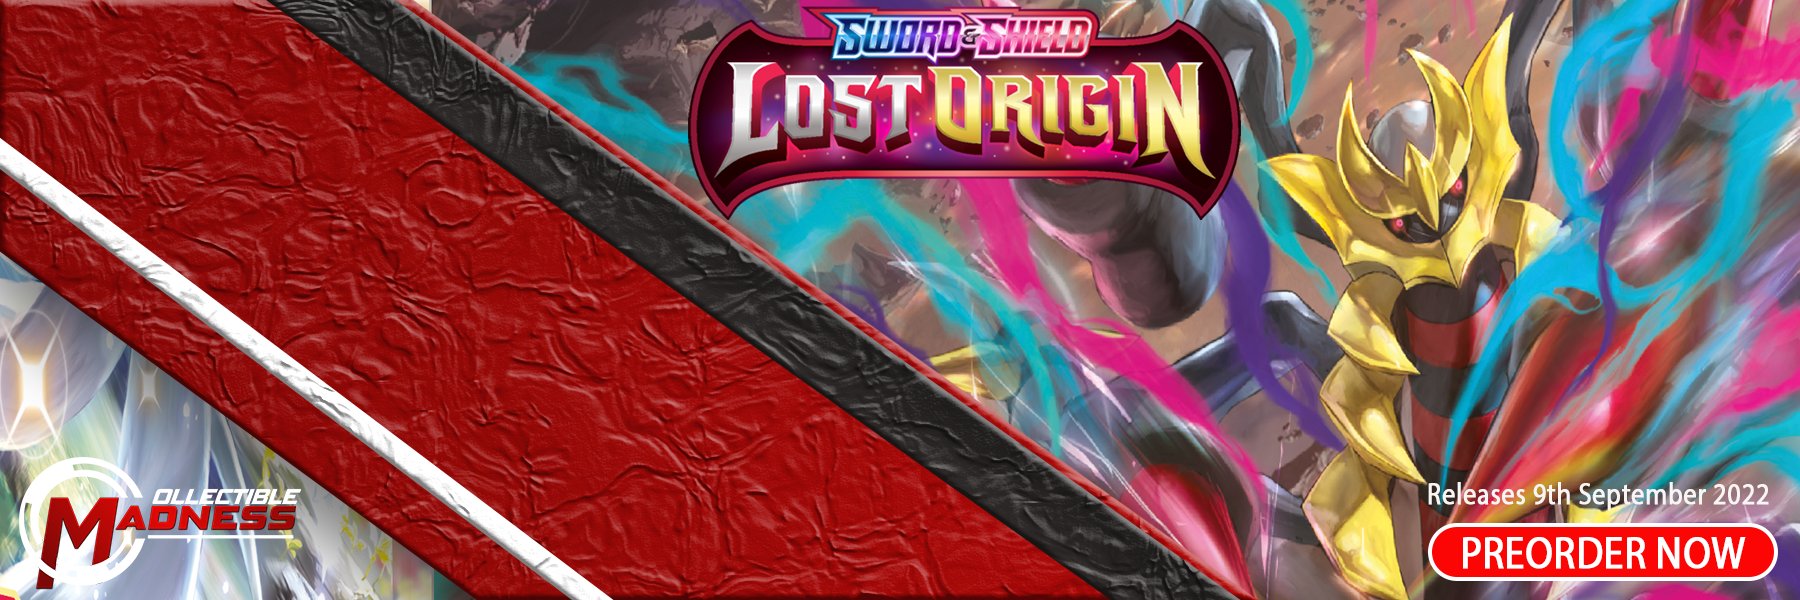 Pokemon TCG: Sword & Shield Lost Origin coming September - My